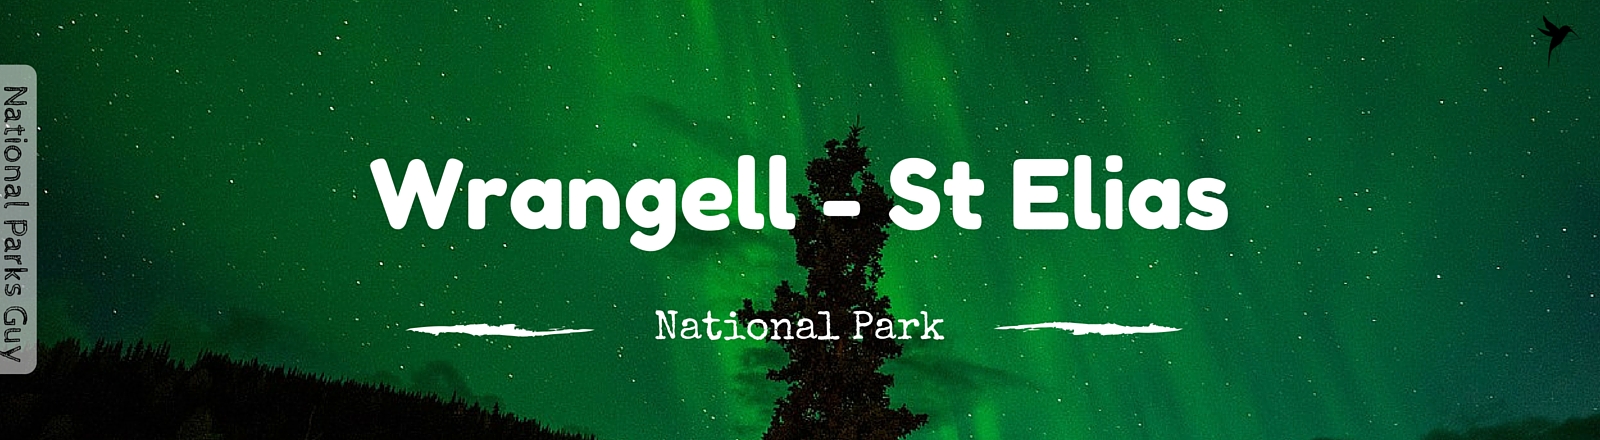 Wrangell - St Elias National Park, USA, National Parks Guy, Stories, Tales, Adventures, Wildlife